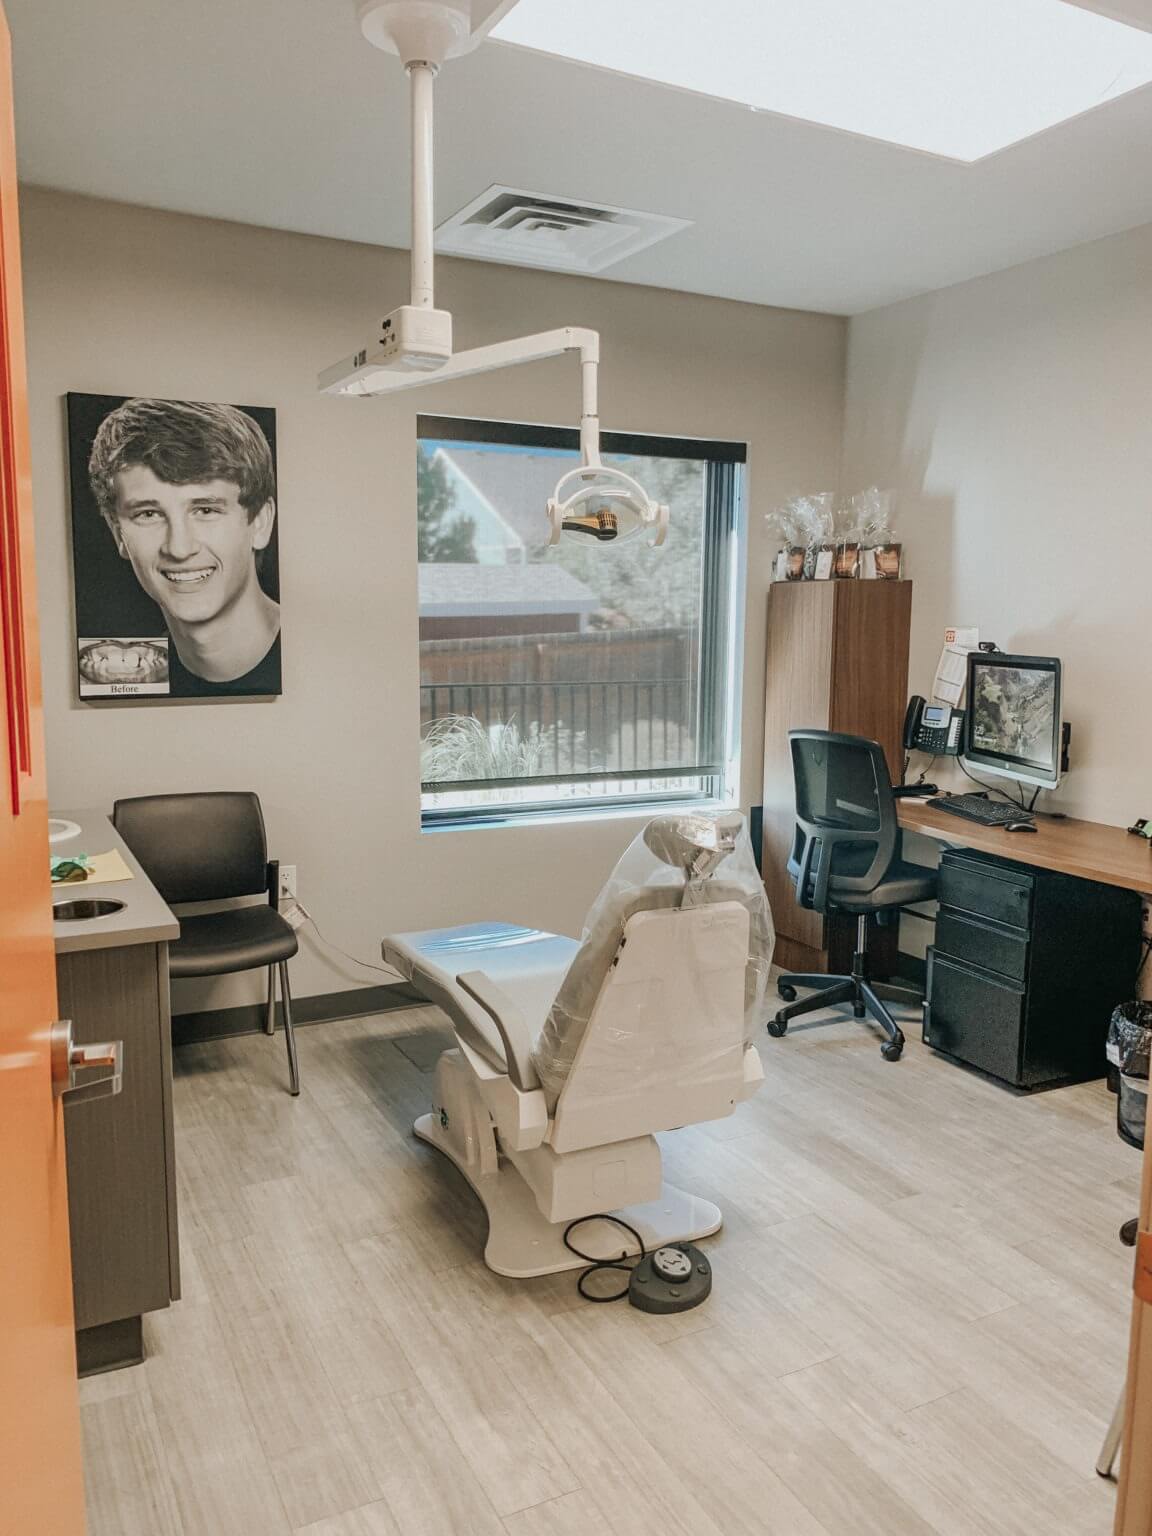 Gillette orthodontic patient room